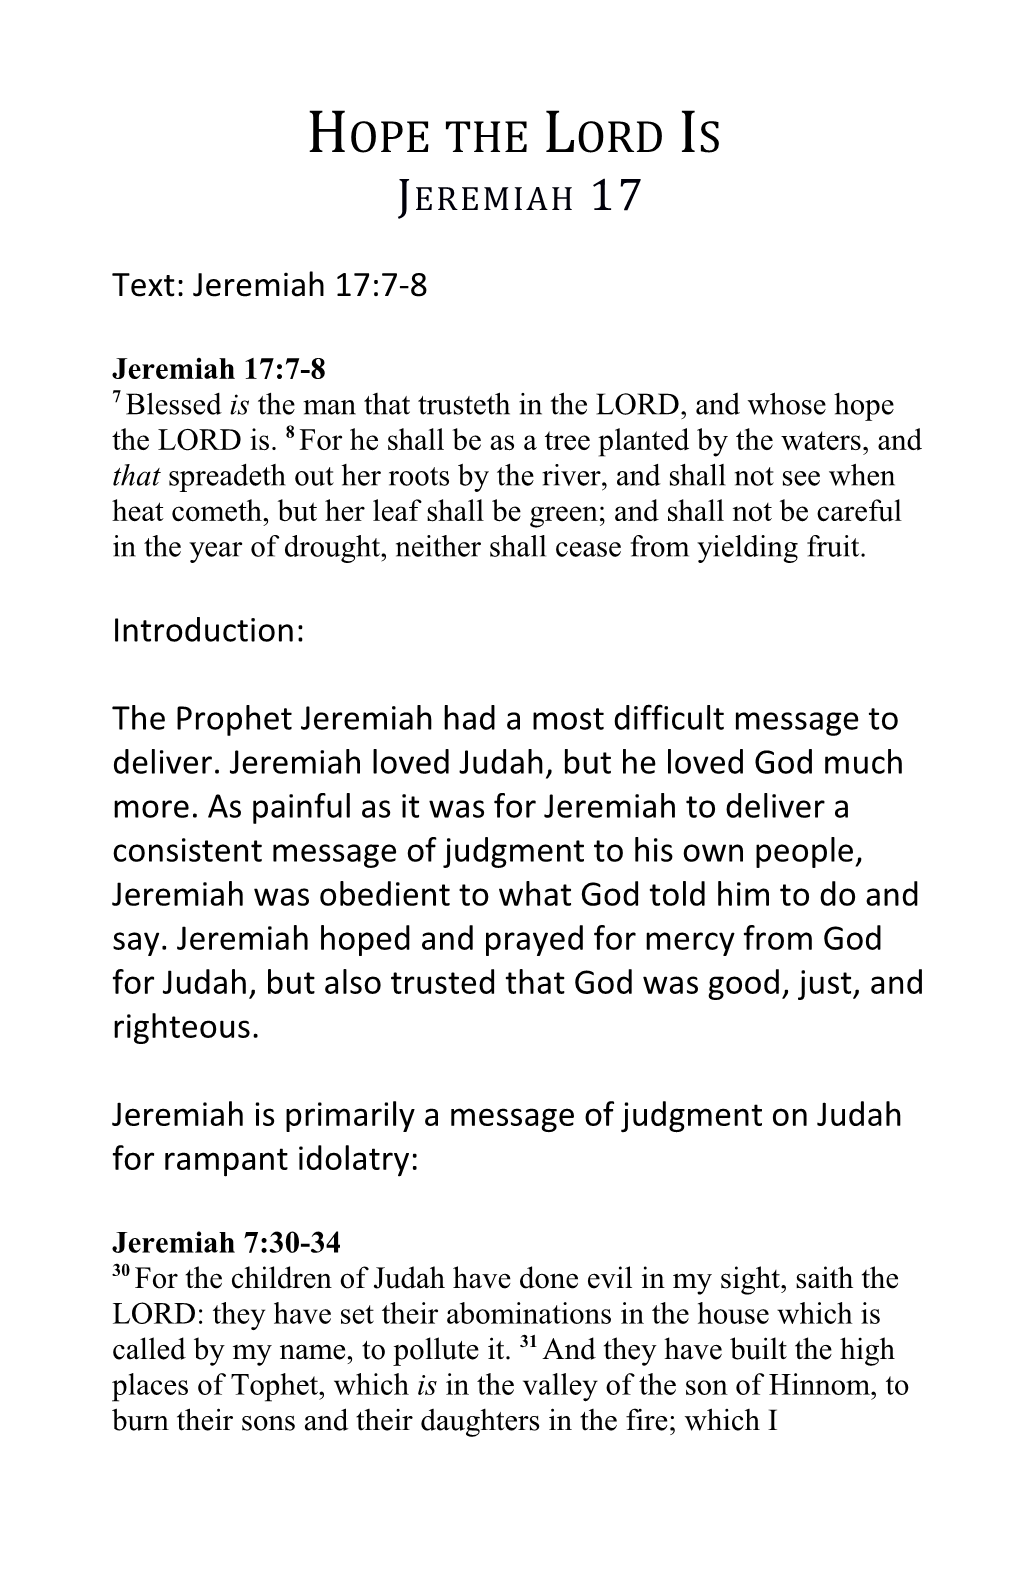 Text: Jeremiah 17:7-8